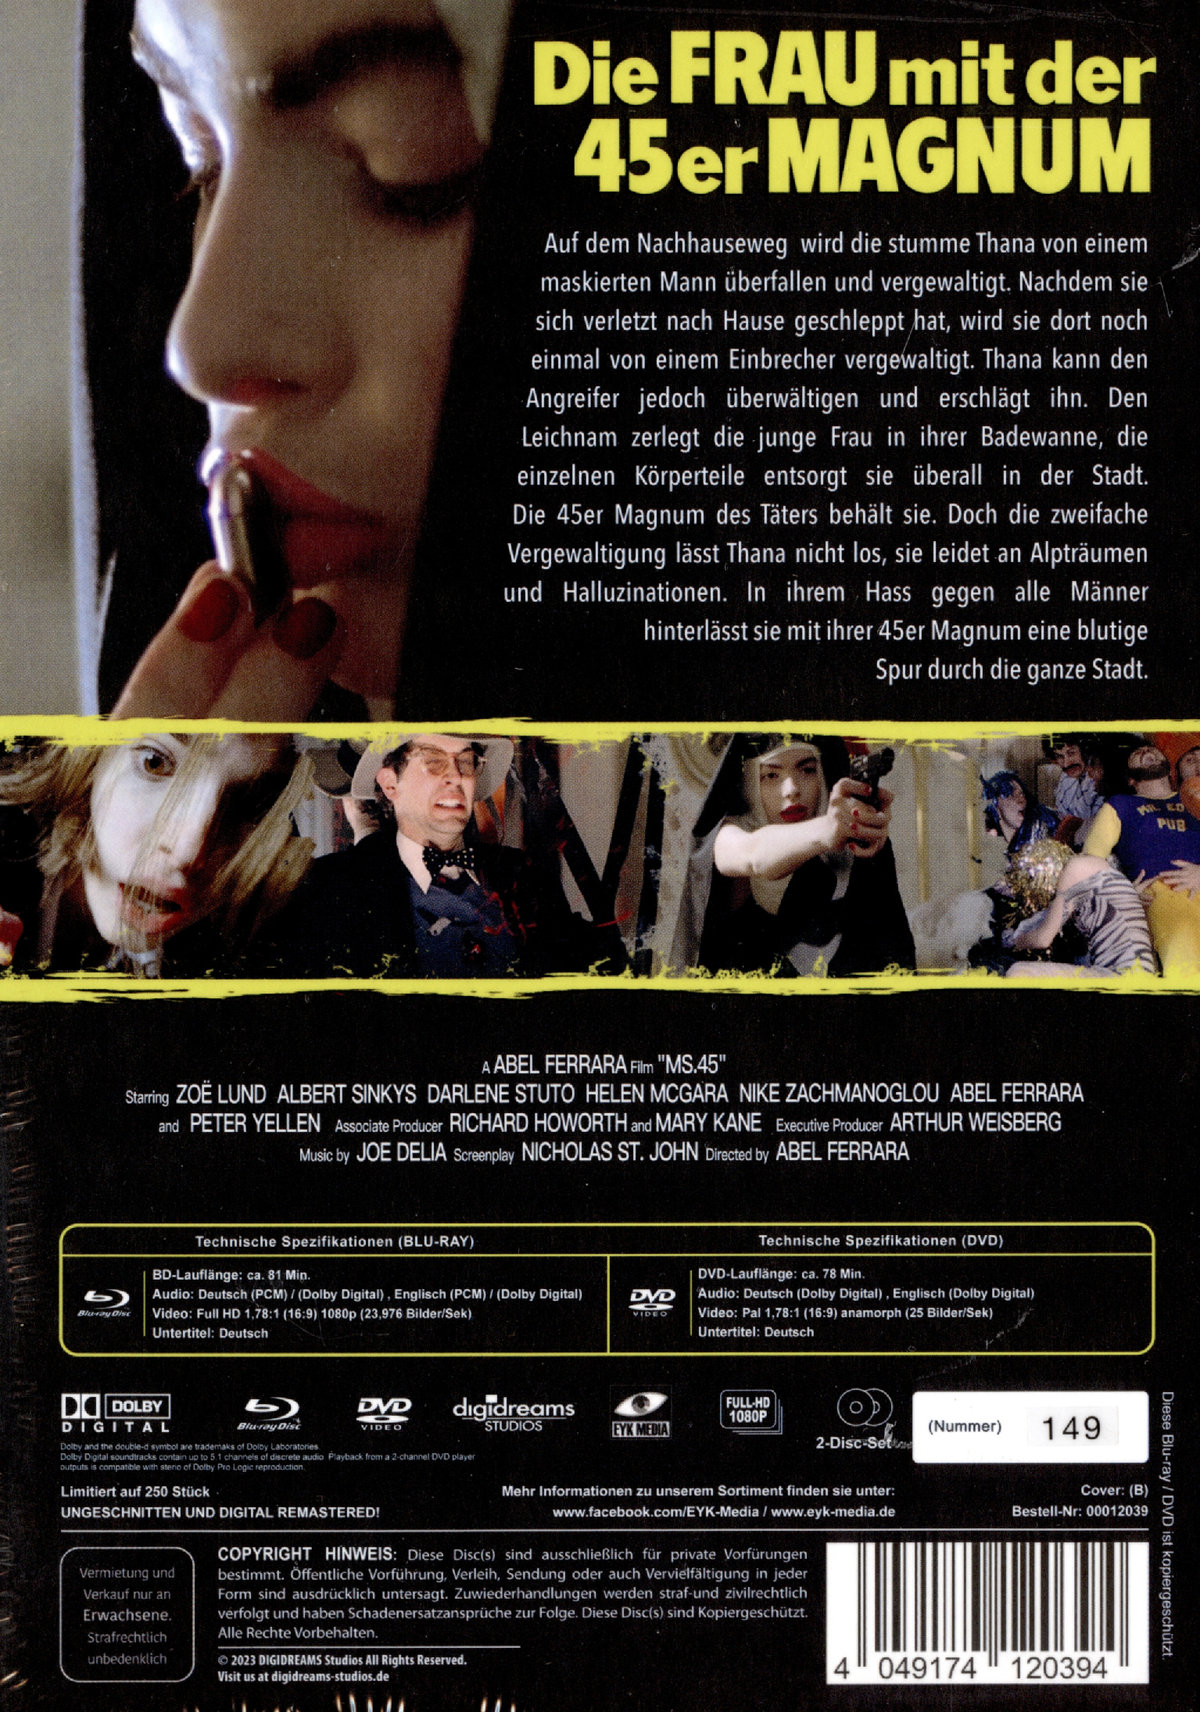 Frau mit der 45er Magnum, Die - Uncut Mediabook Edition (DVD+blu-ray) (B)